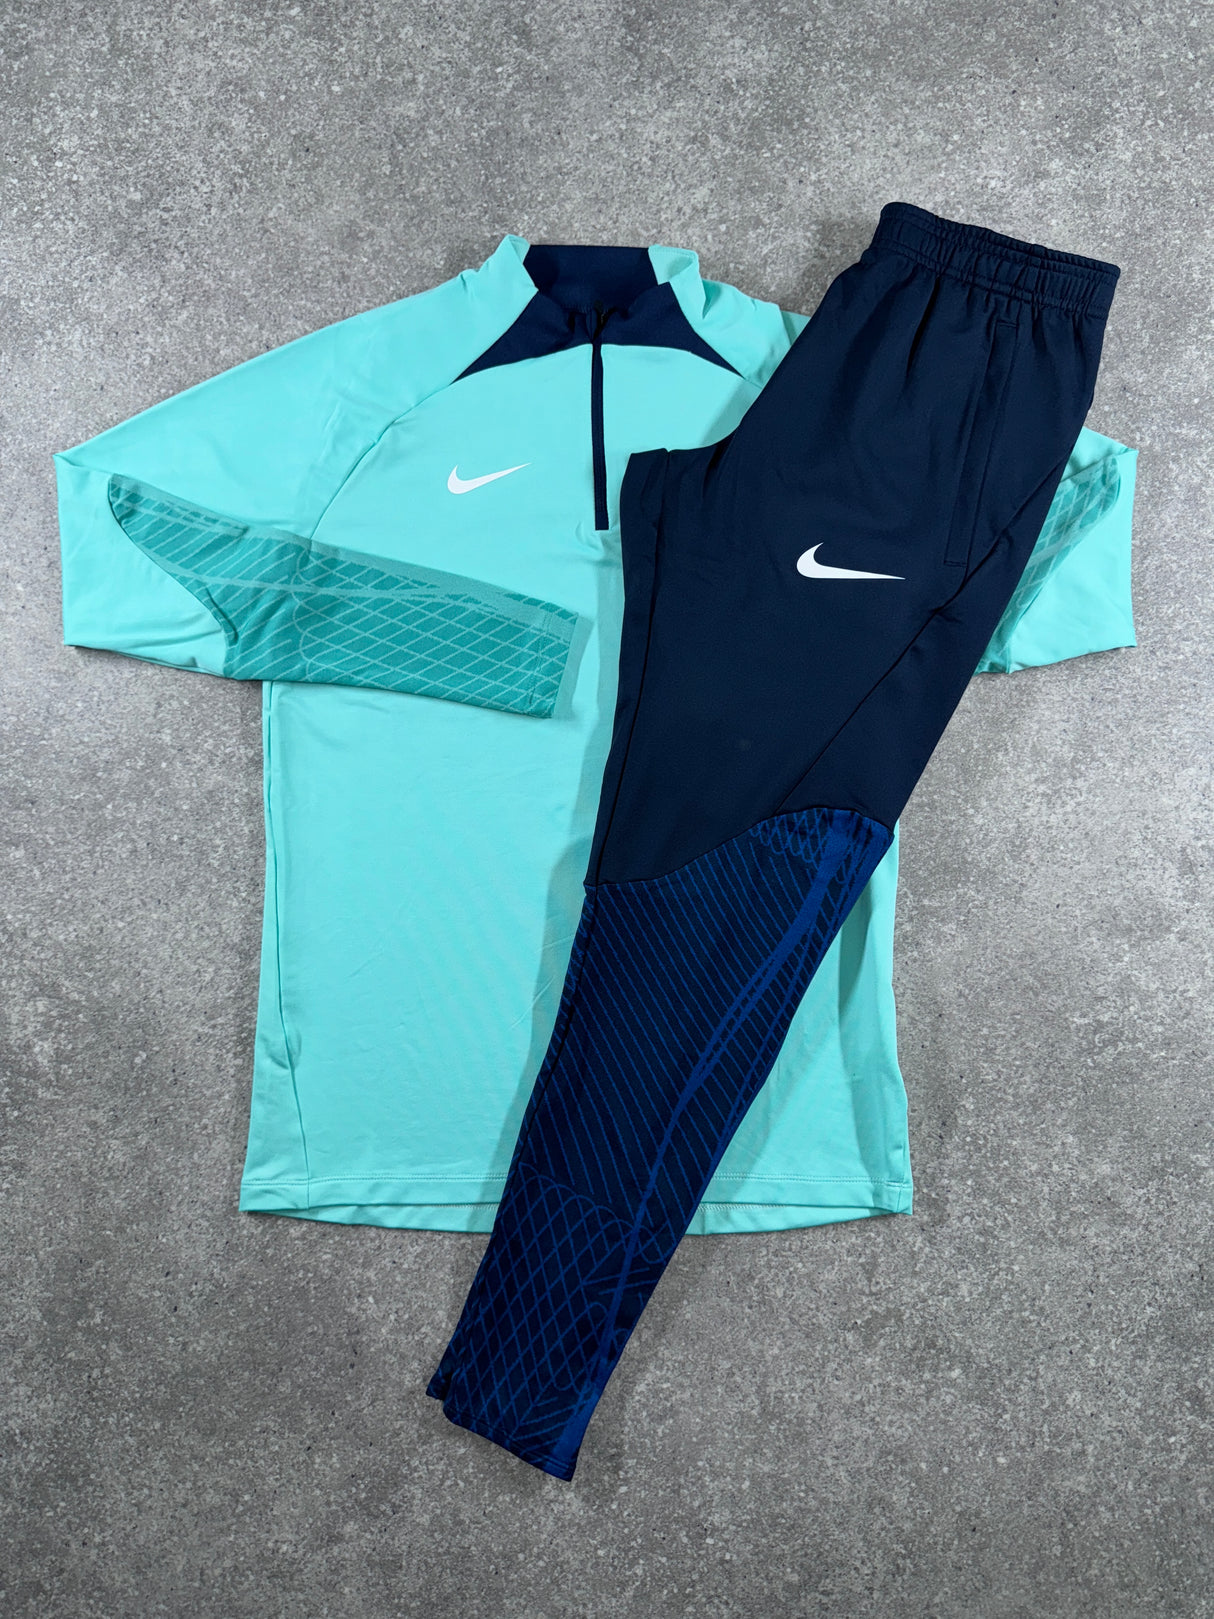 Nike - Strike Tracksuit - Hyper turquoise